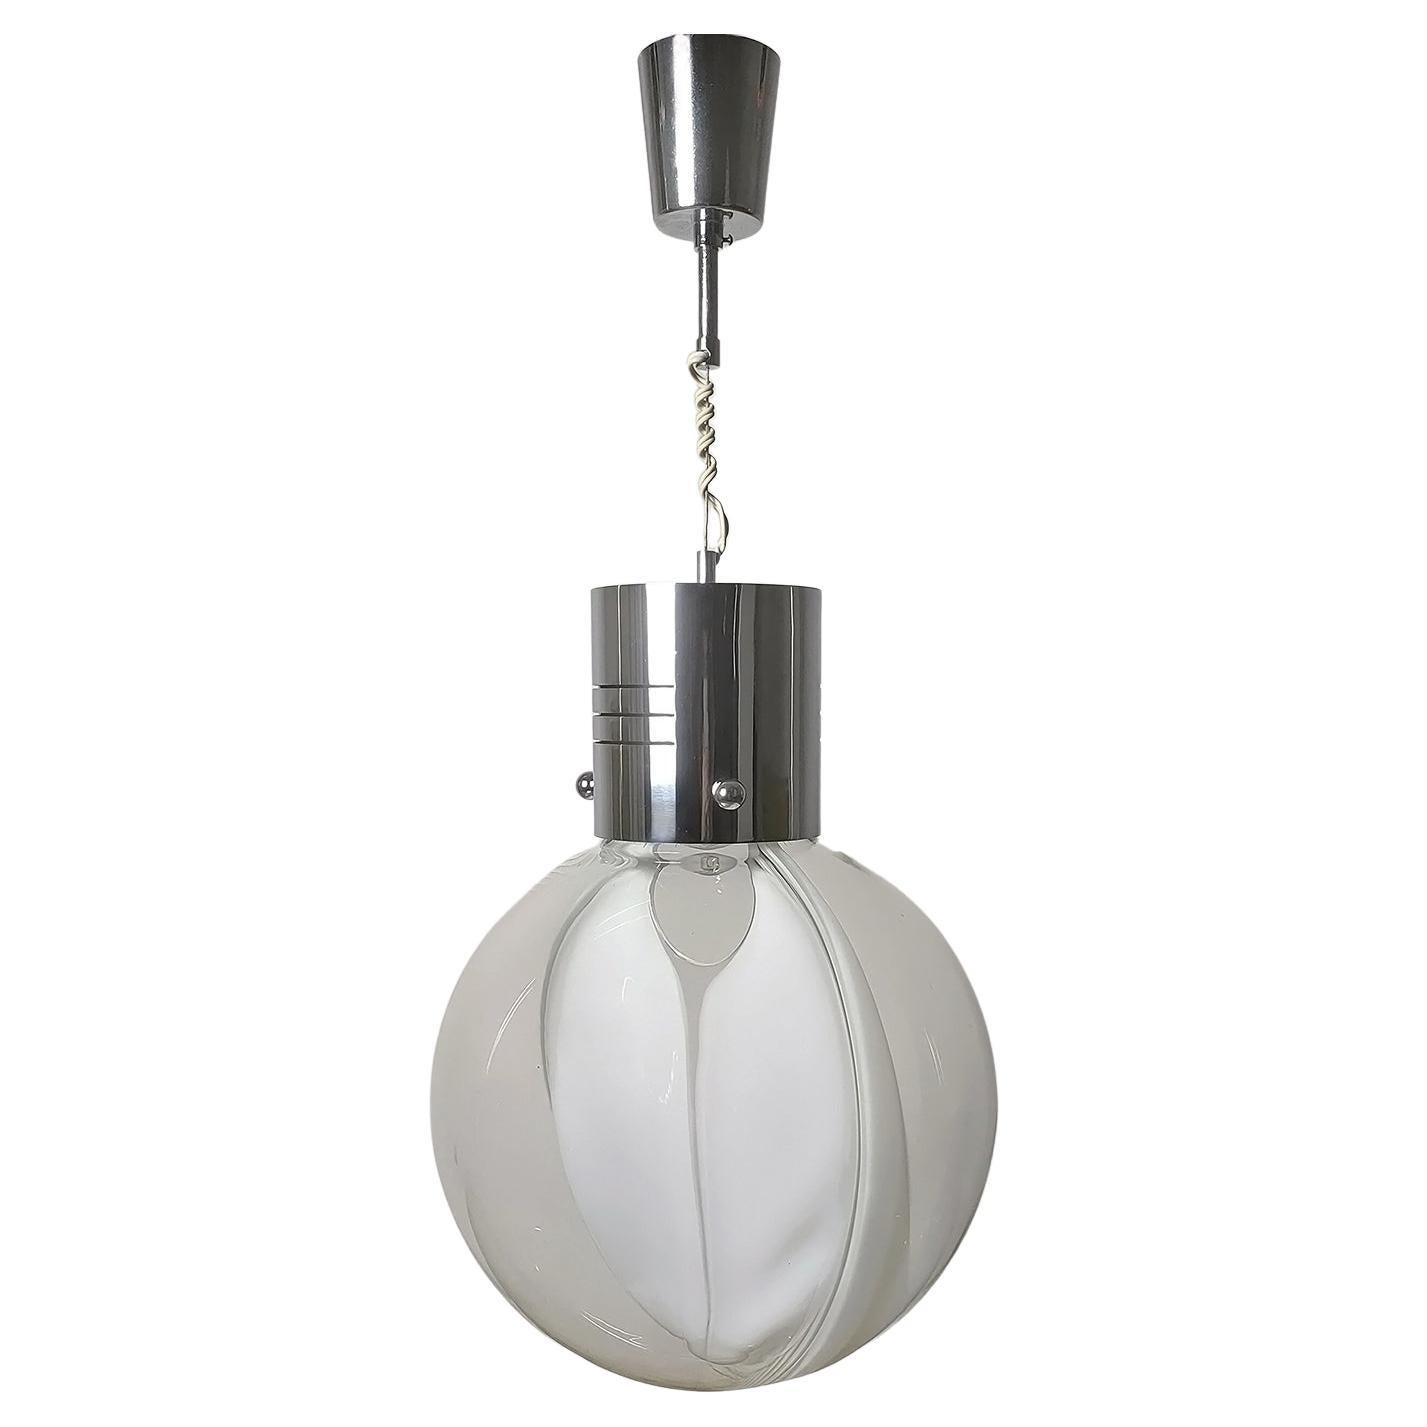 Toni Zuccheri Membrana Ceiling Lamp in Murano Glass by Venini 1960s Italy For Sale